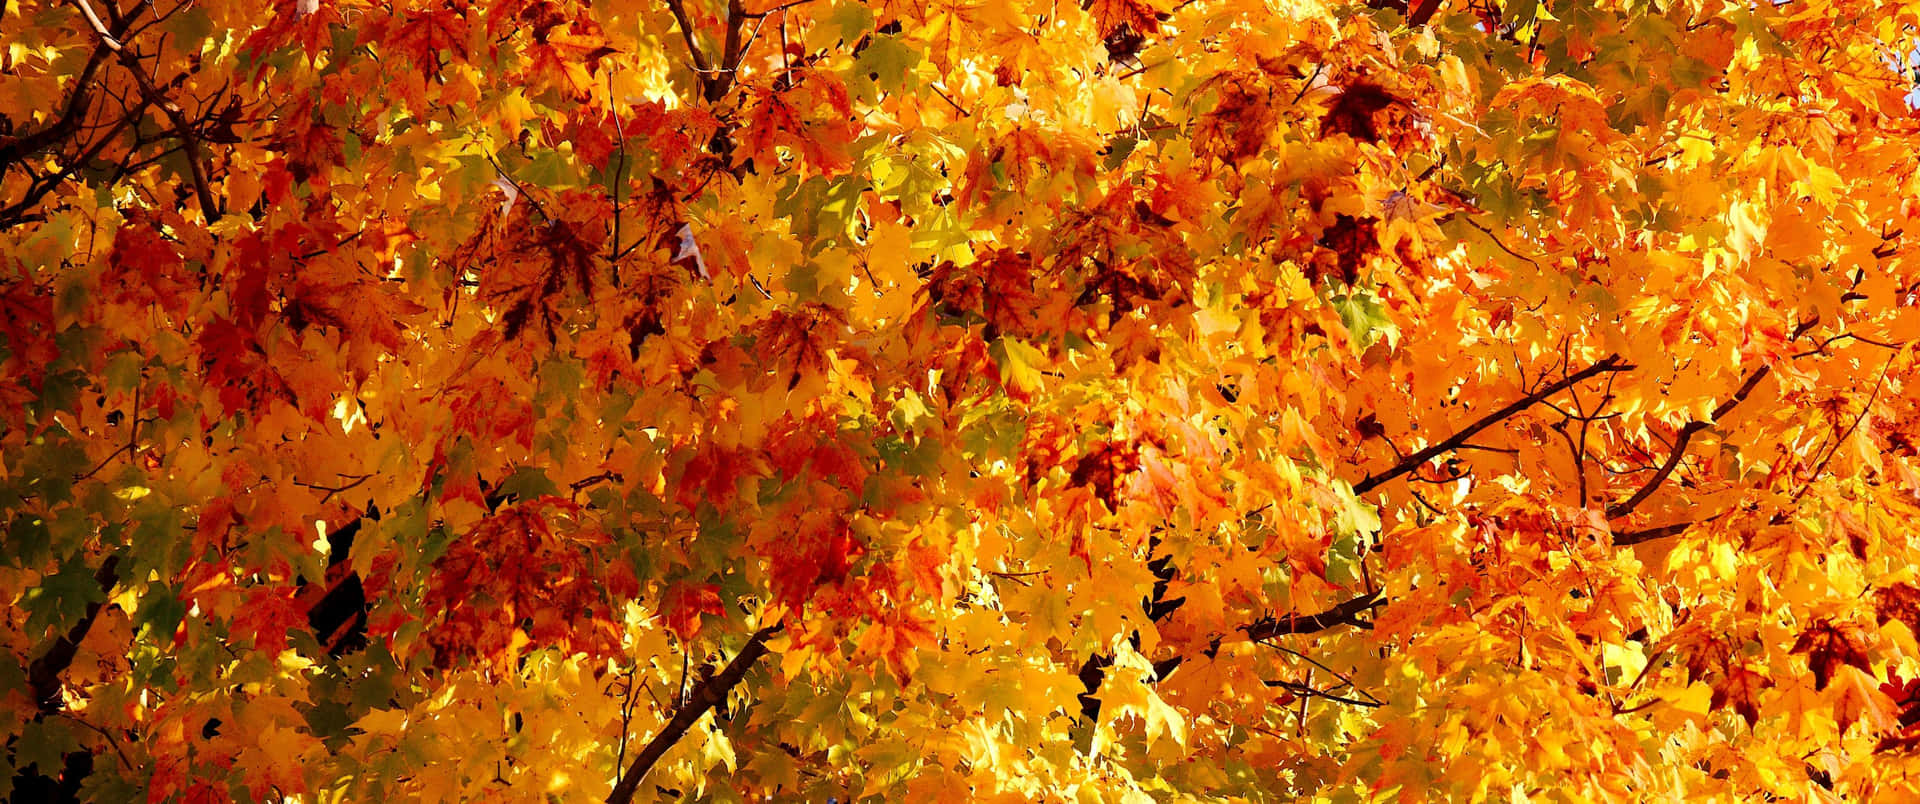 Enjoy the beautiful fall season with this 3440x1440 wallpaper! Wallpaper